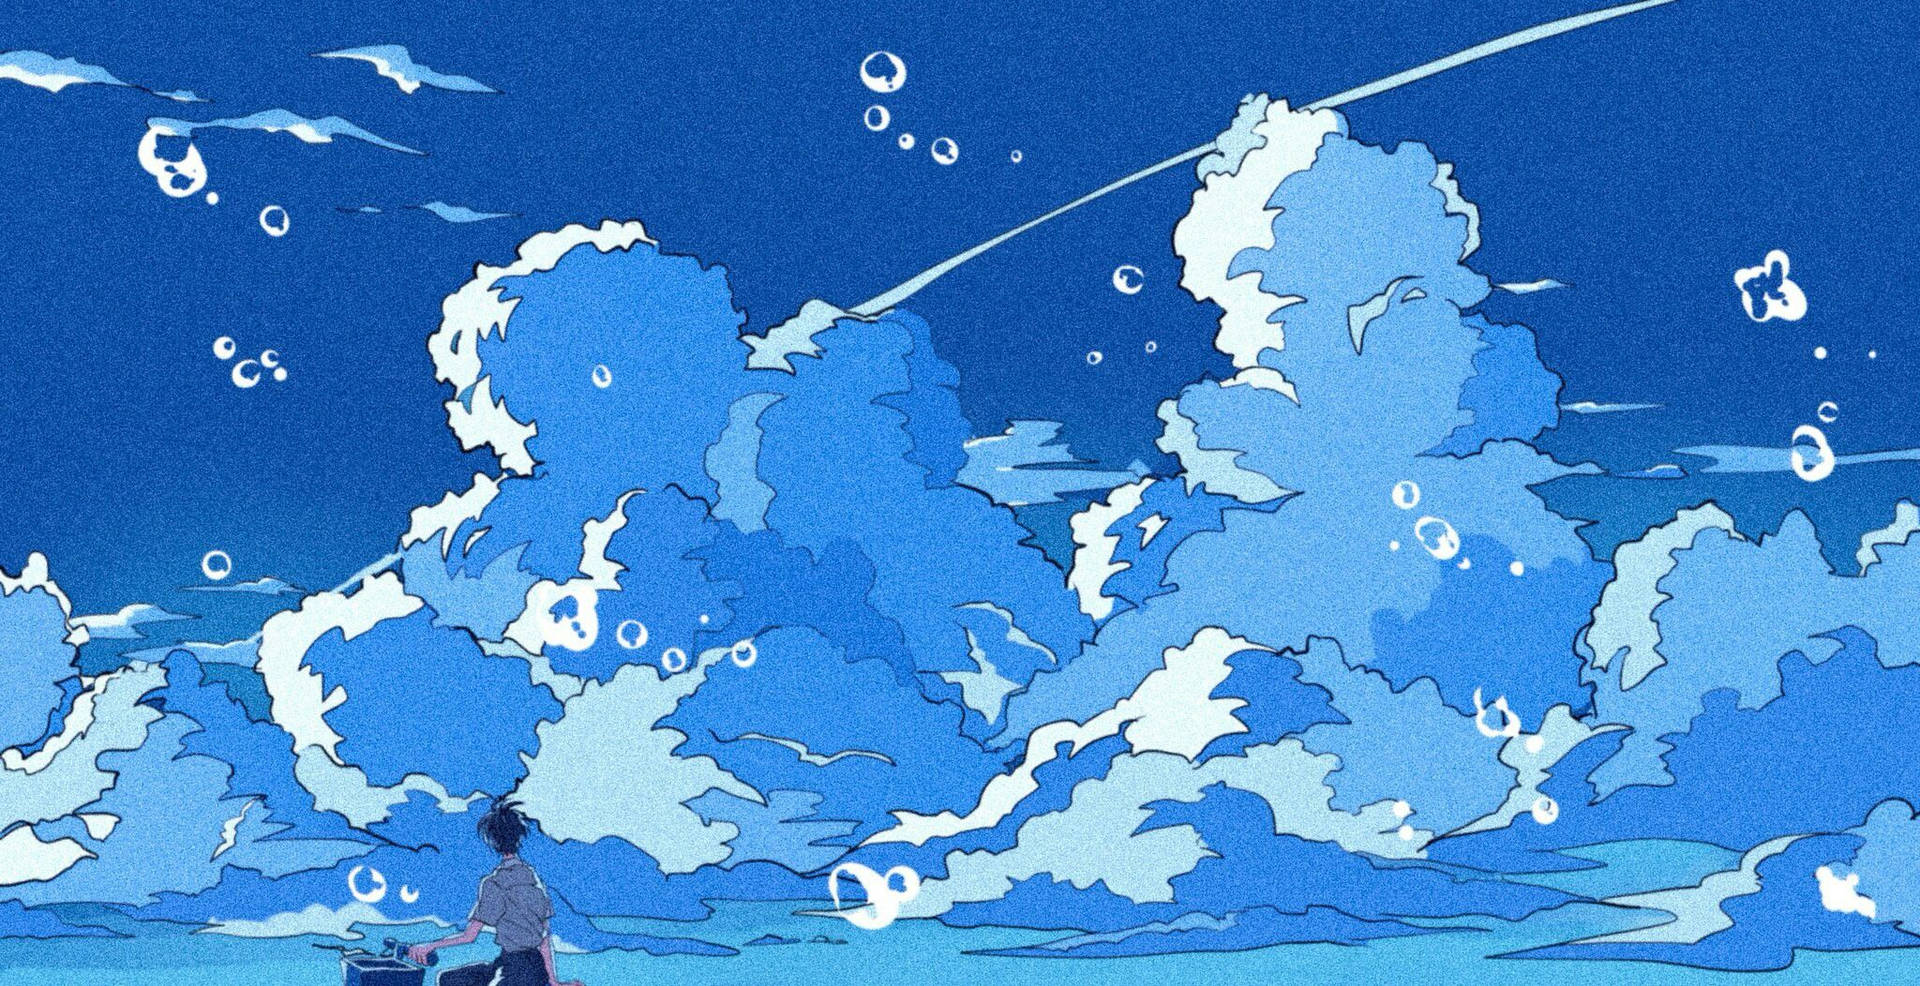 Aesthetic Anime Desktop Bubbles In Clouds Wallpaper